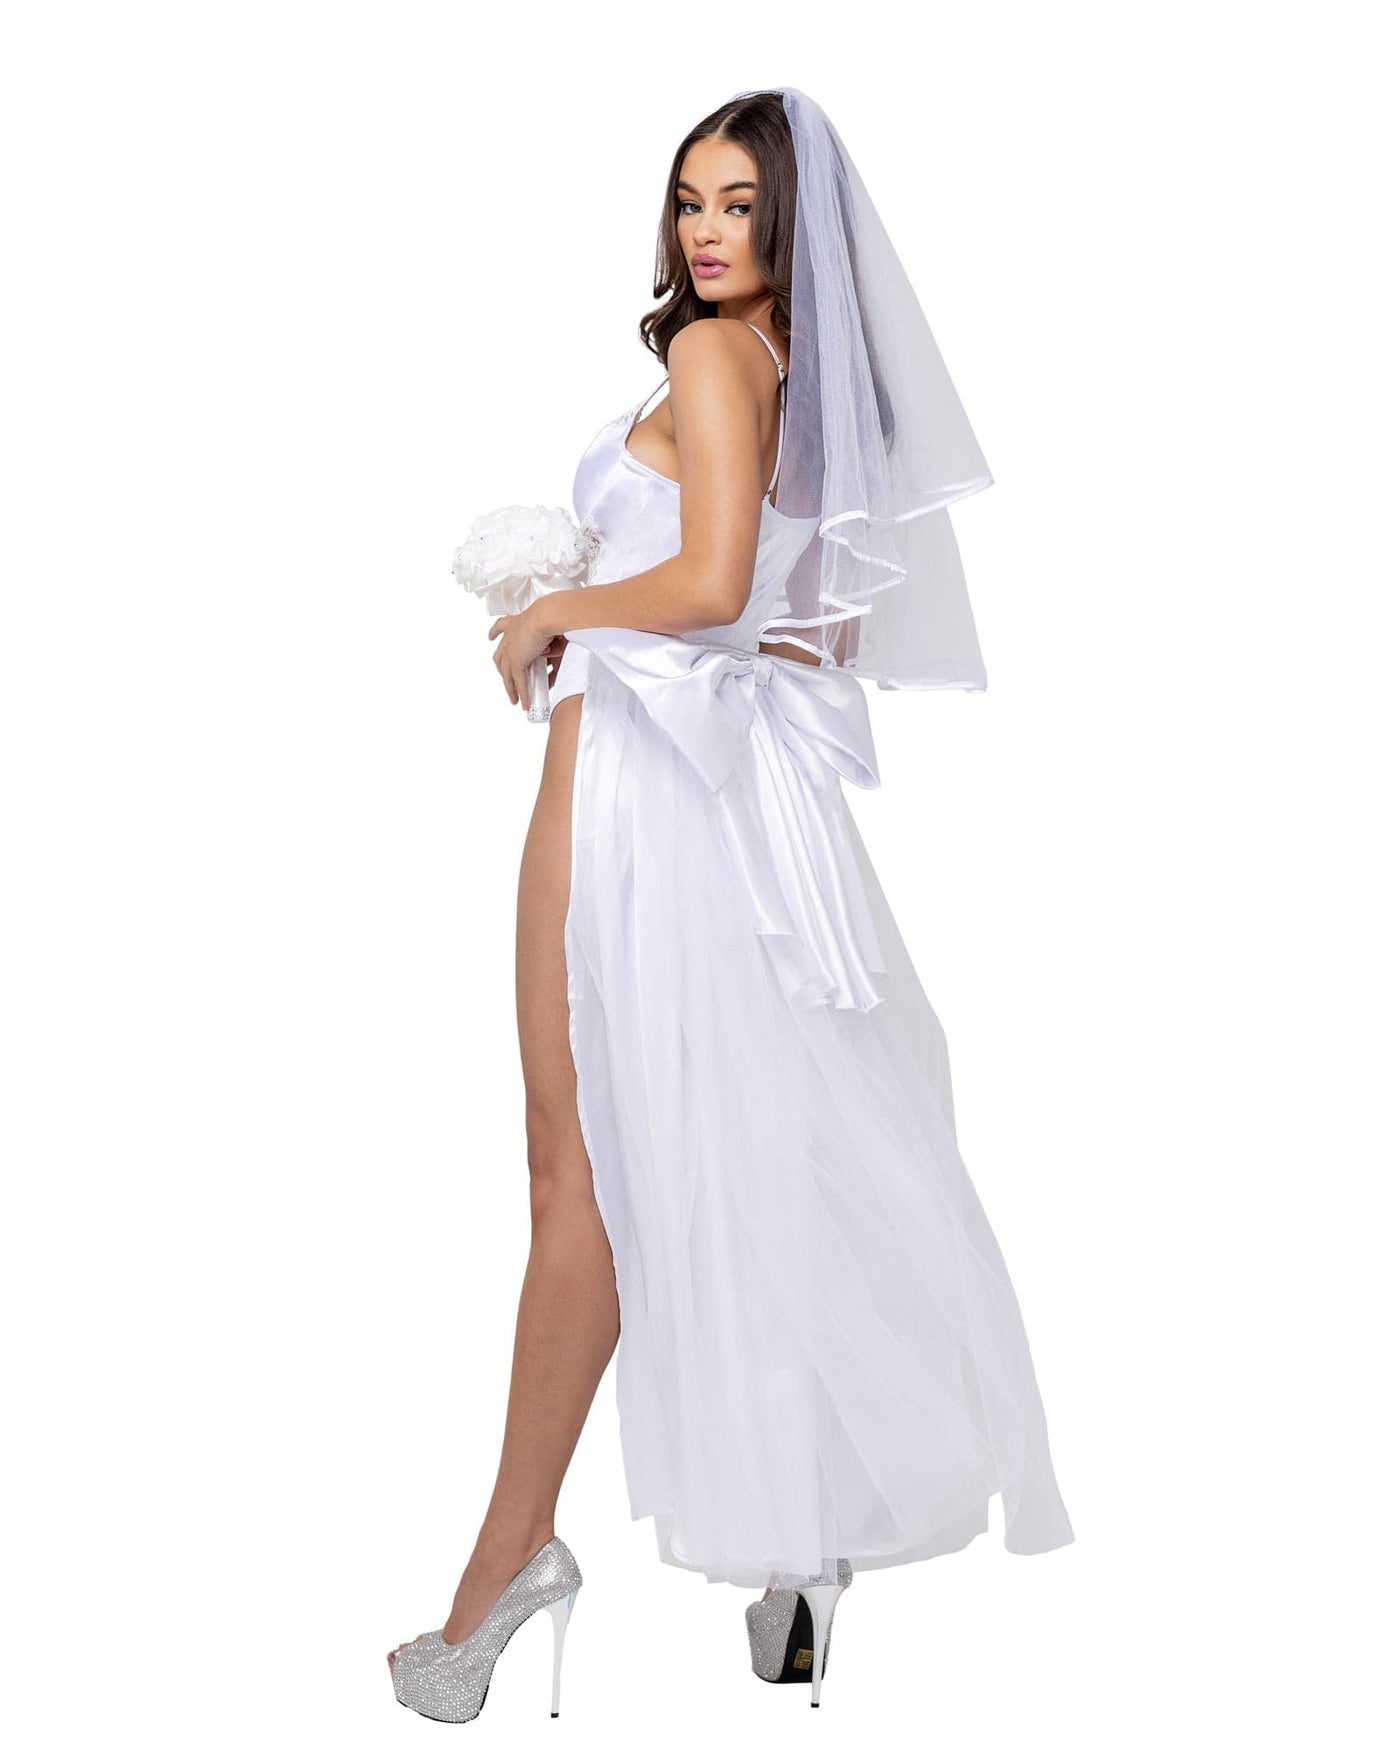 3pc. Blushing Bride Women's Costume - For Love of Lingerie